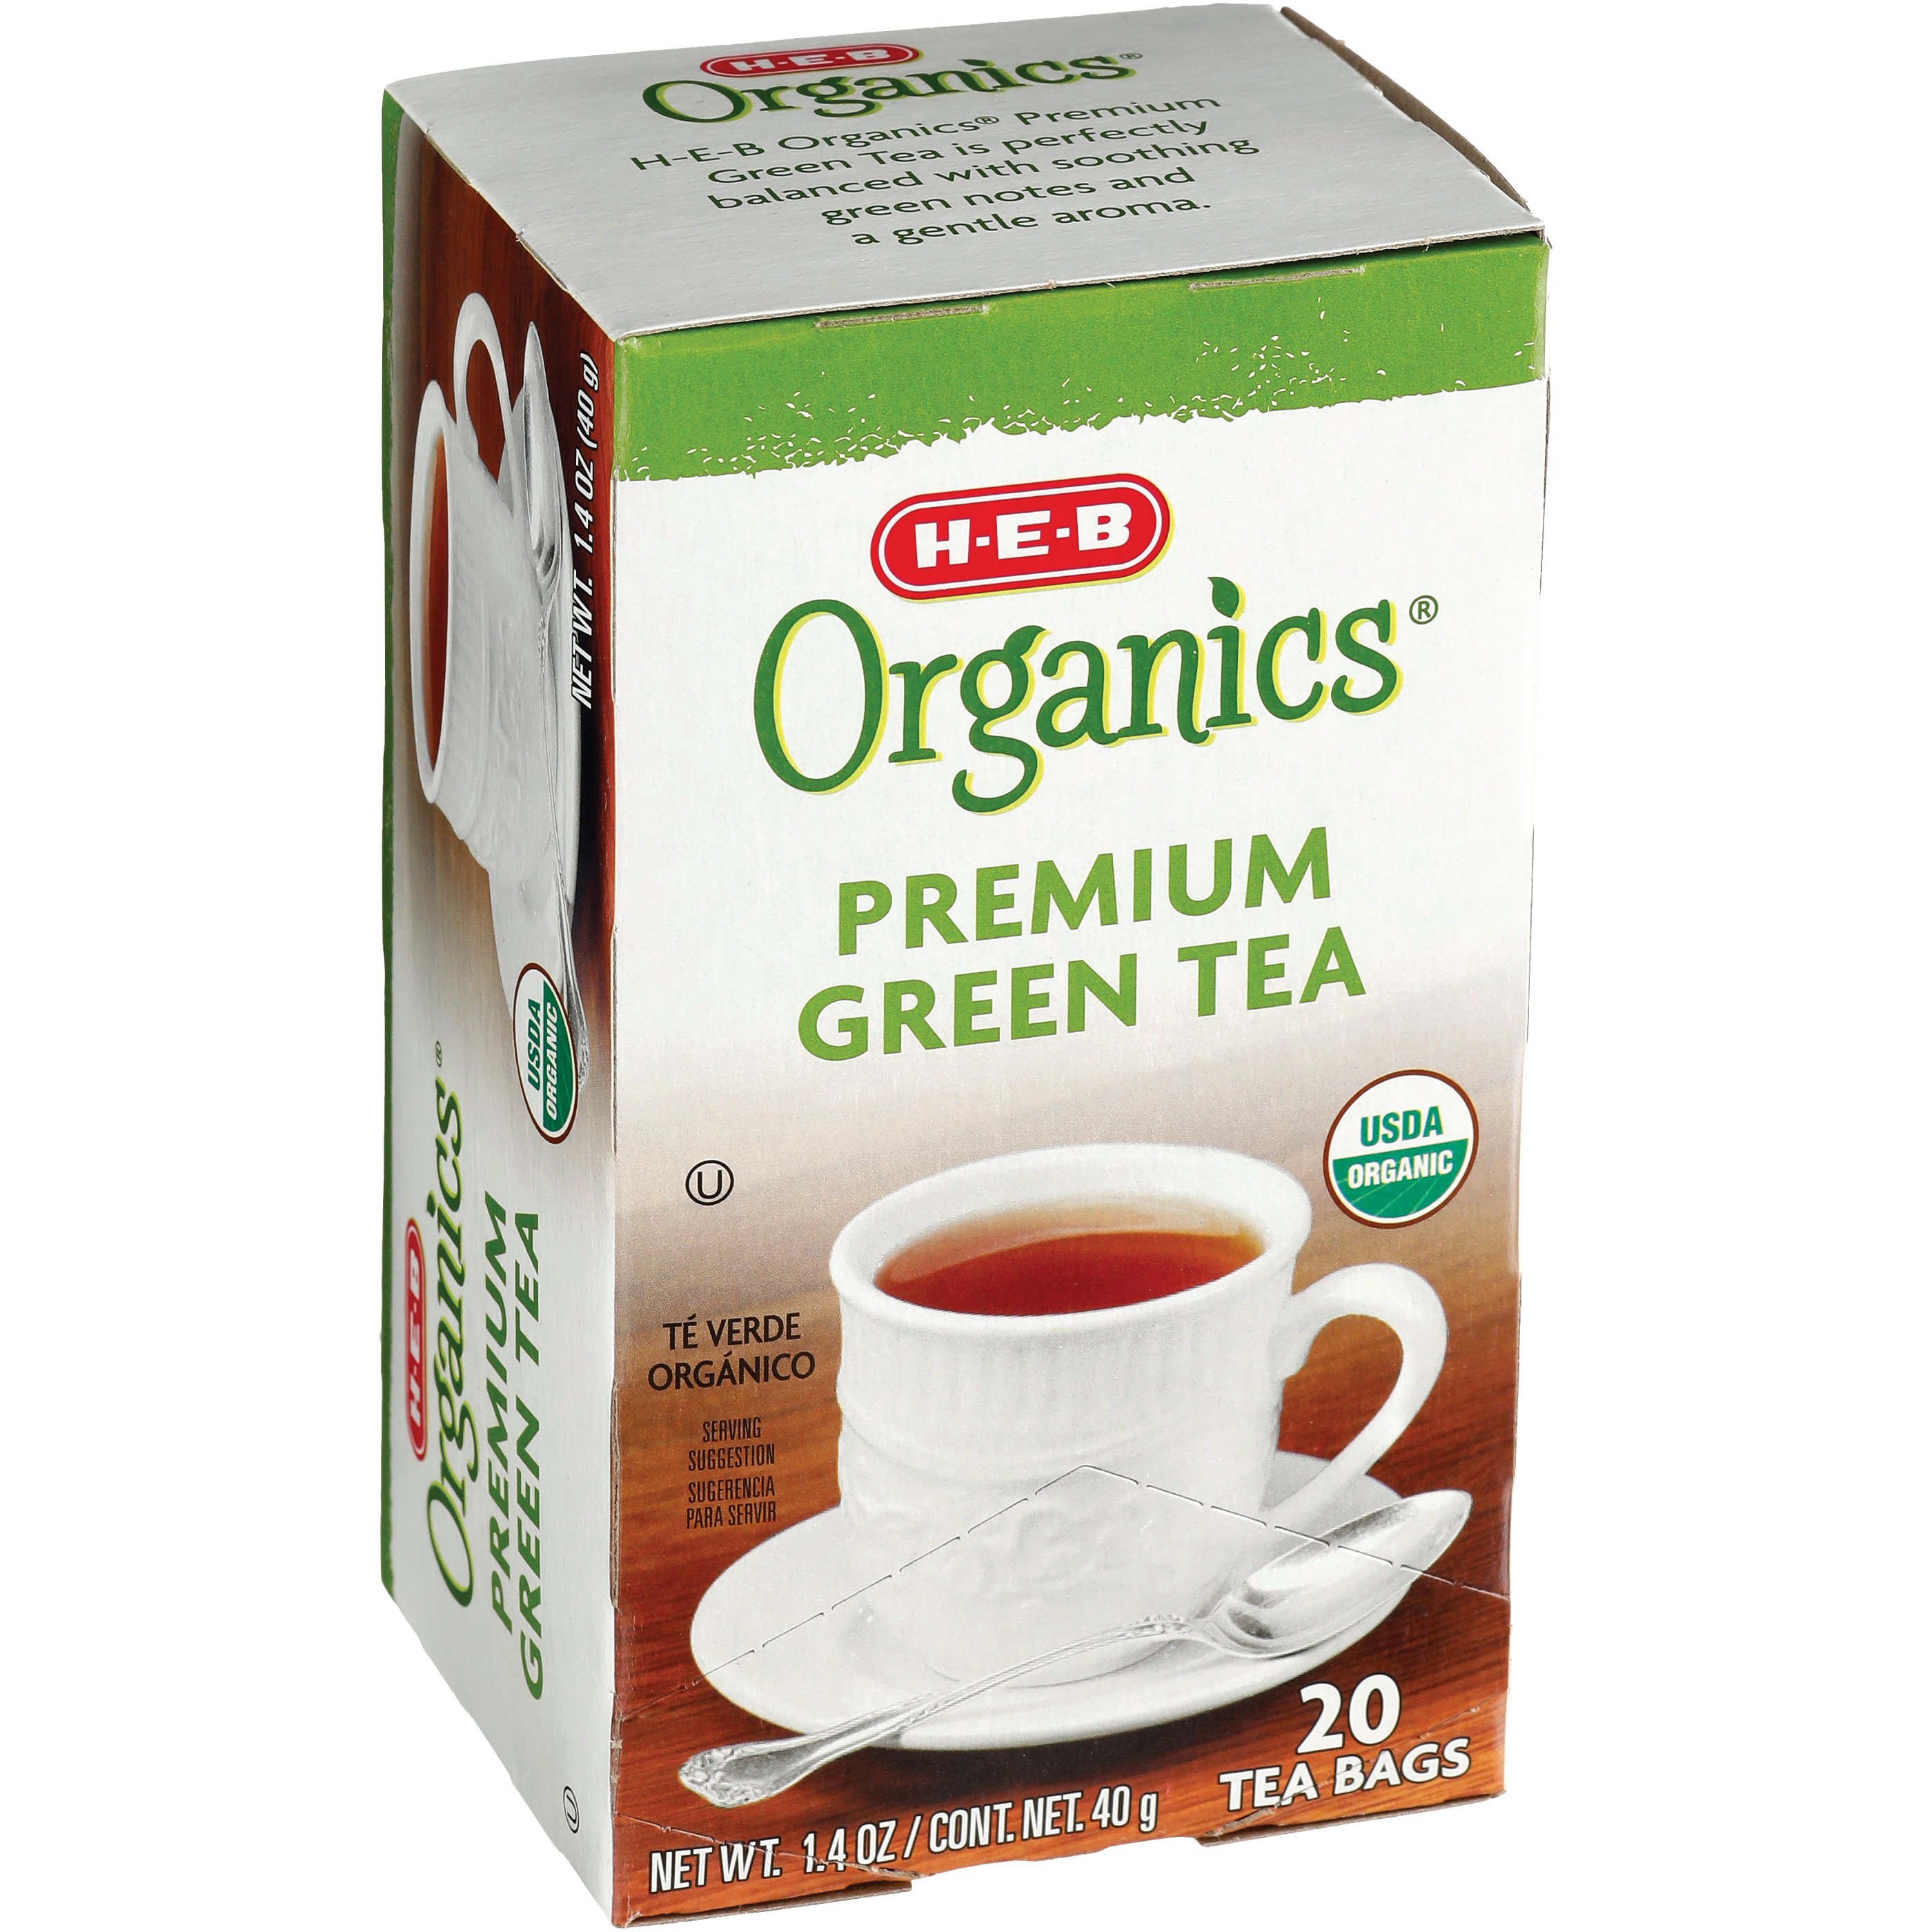 H E B Organics Green Tea Bags Shop Tea At H E B